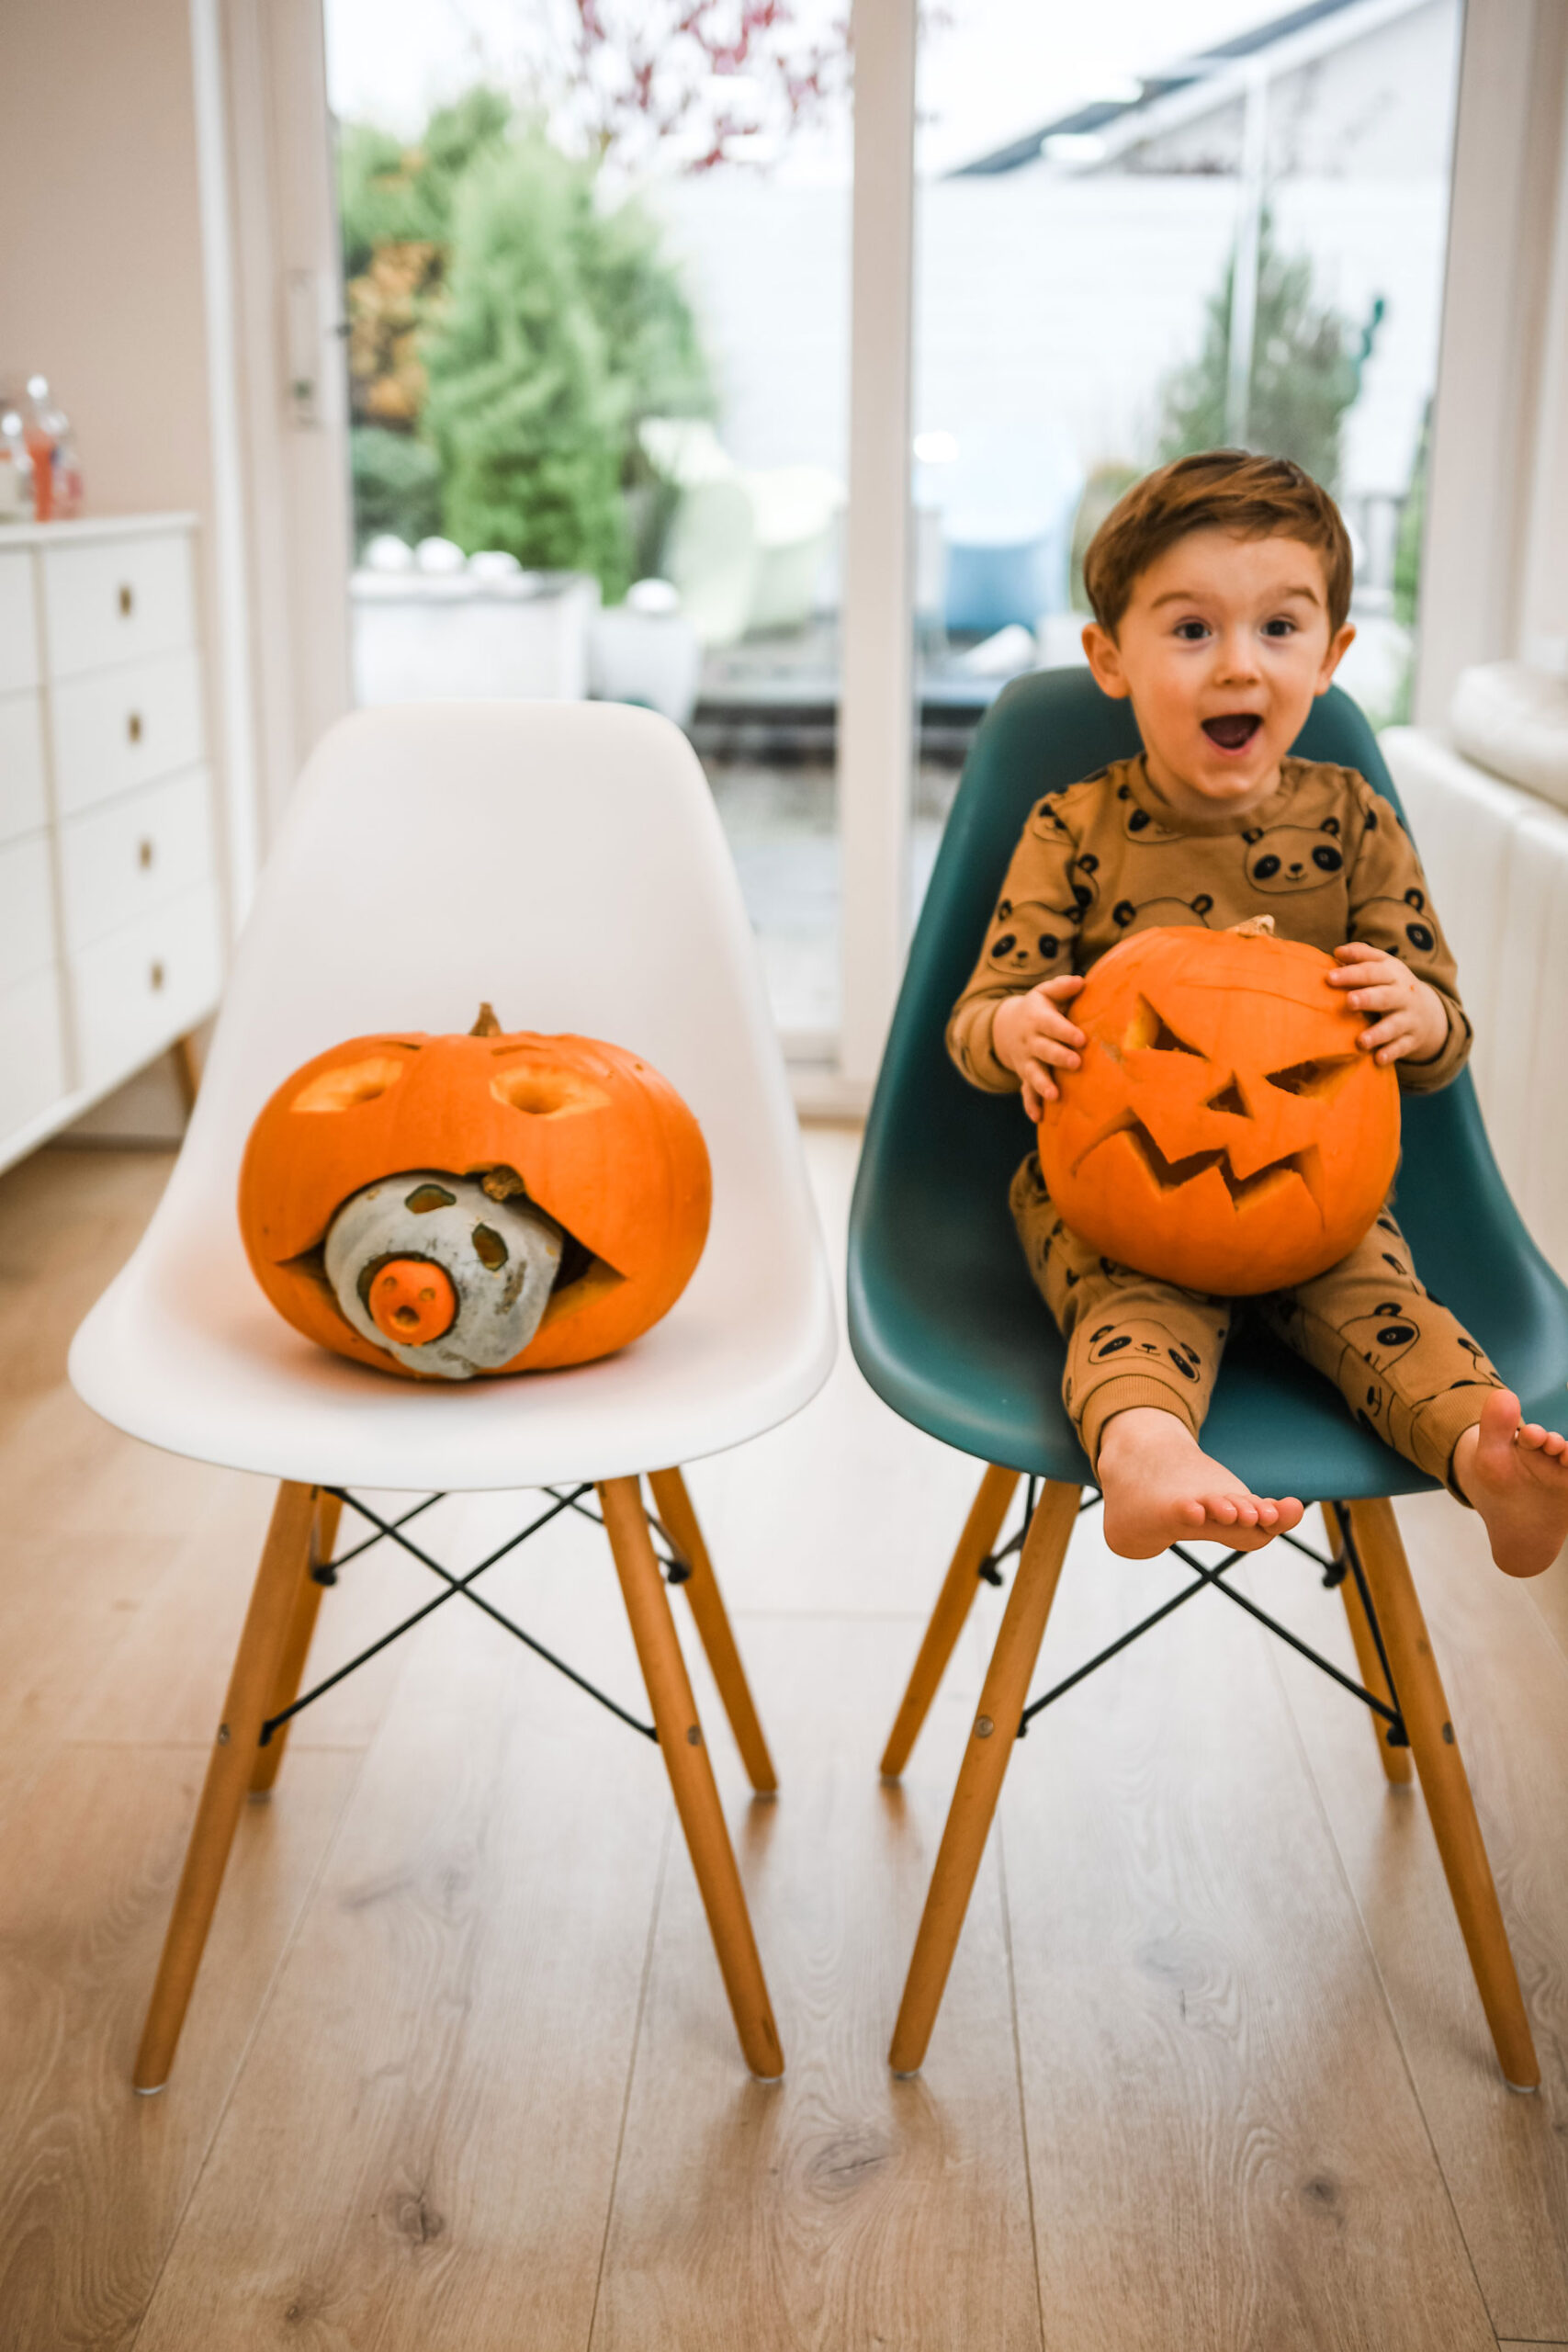 Halloween 2020: carved pumpkins